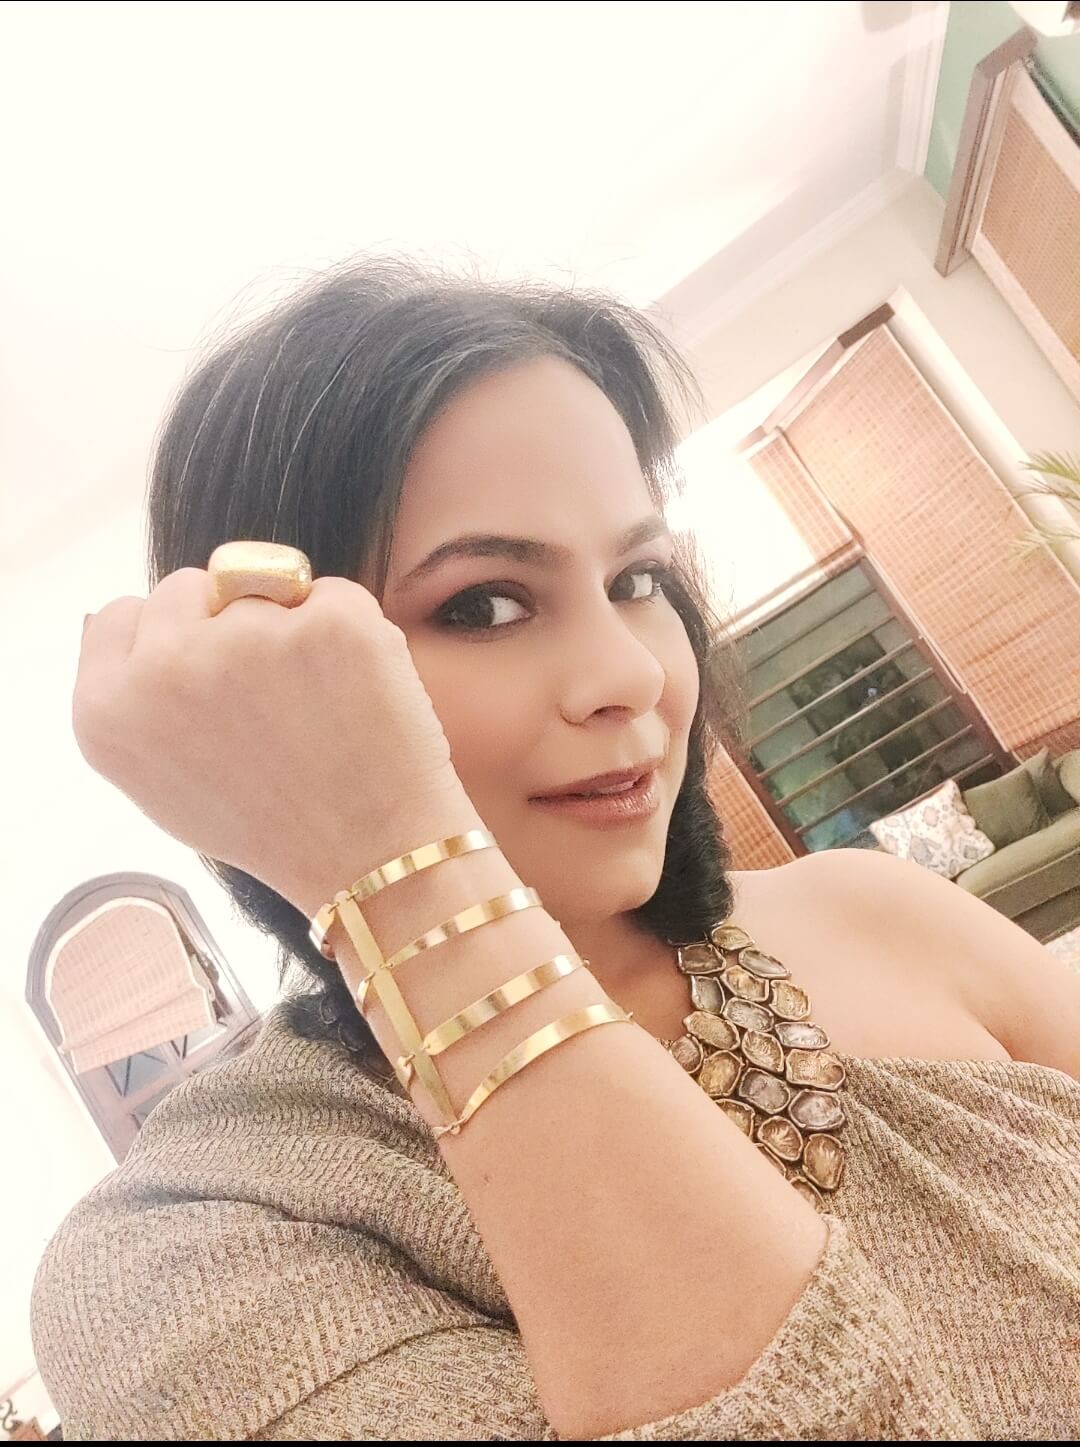 Details more than 90 anika hand bracelet online - POPPY